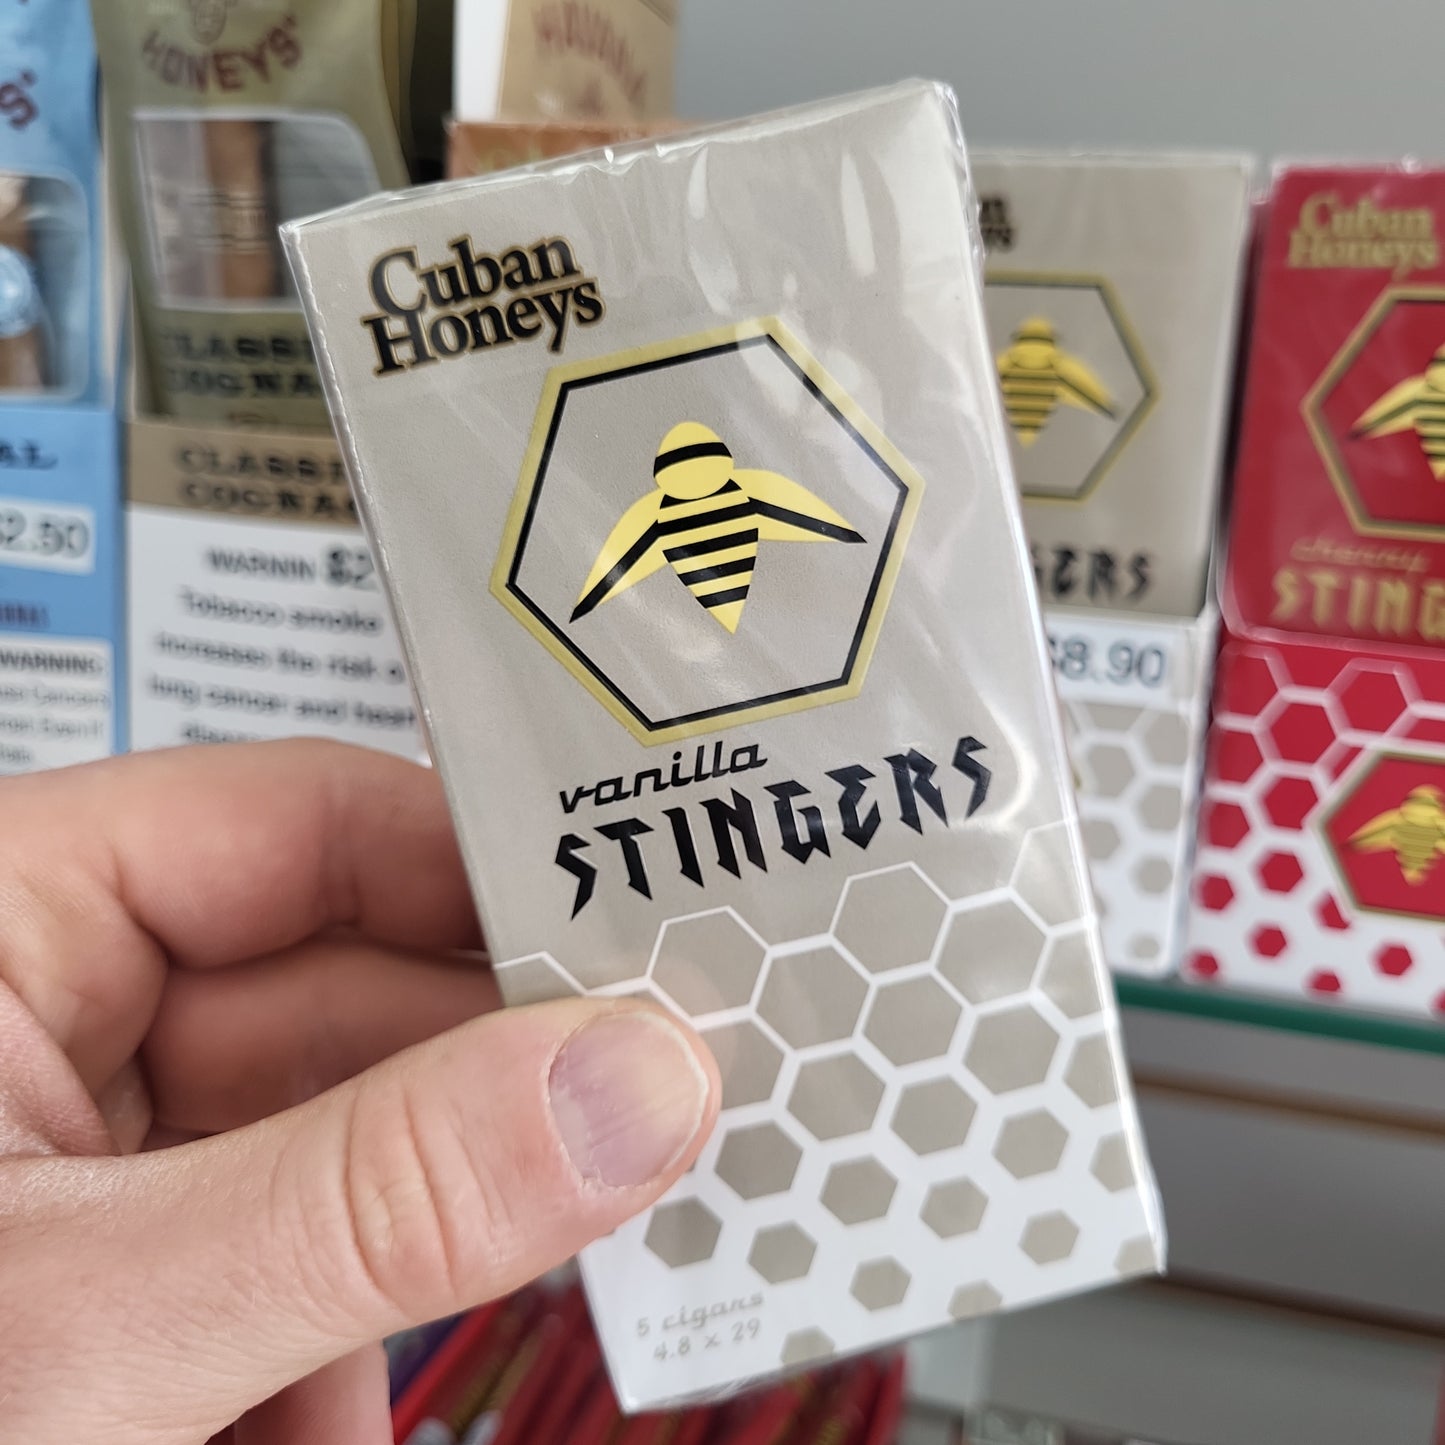 Cuban Honeys - Stingers Vanilla